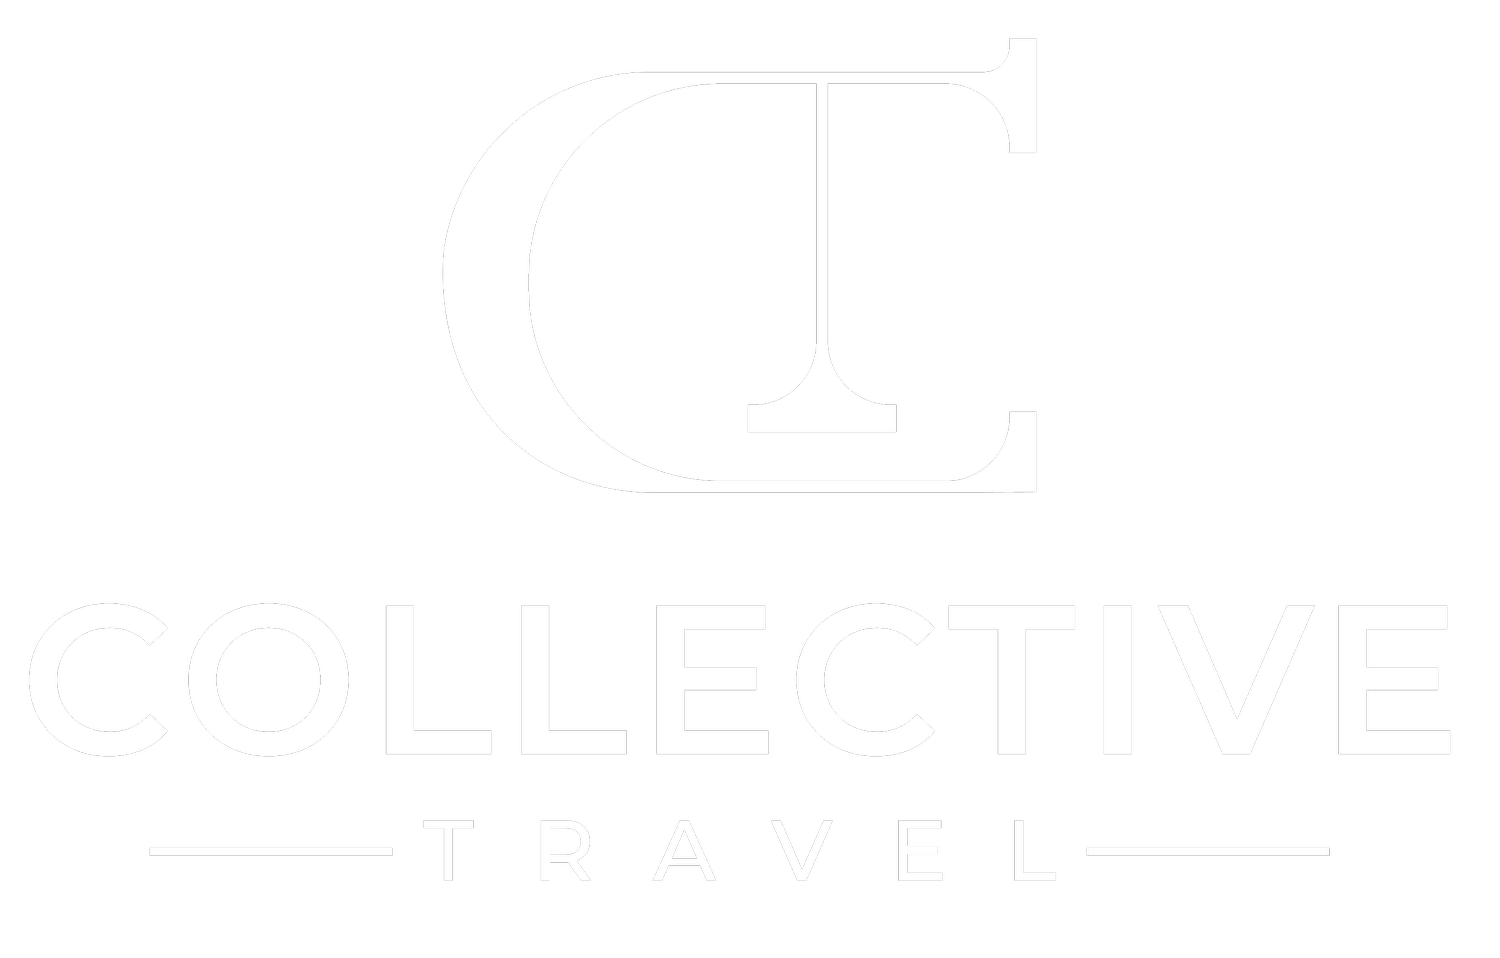 Collective Travel Design